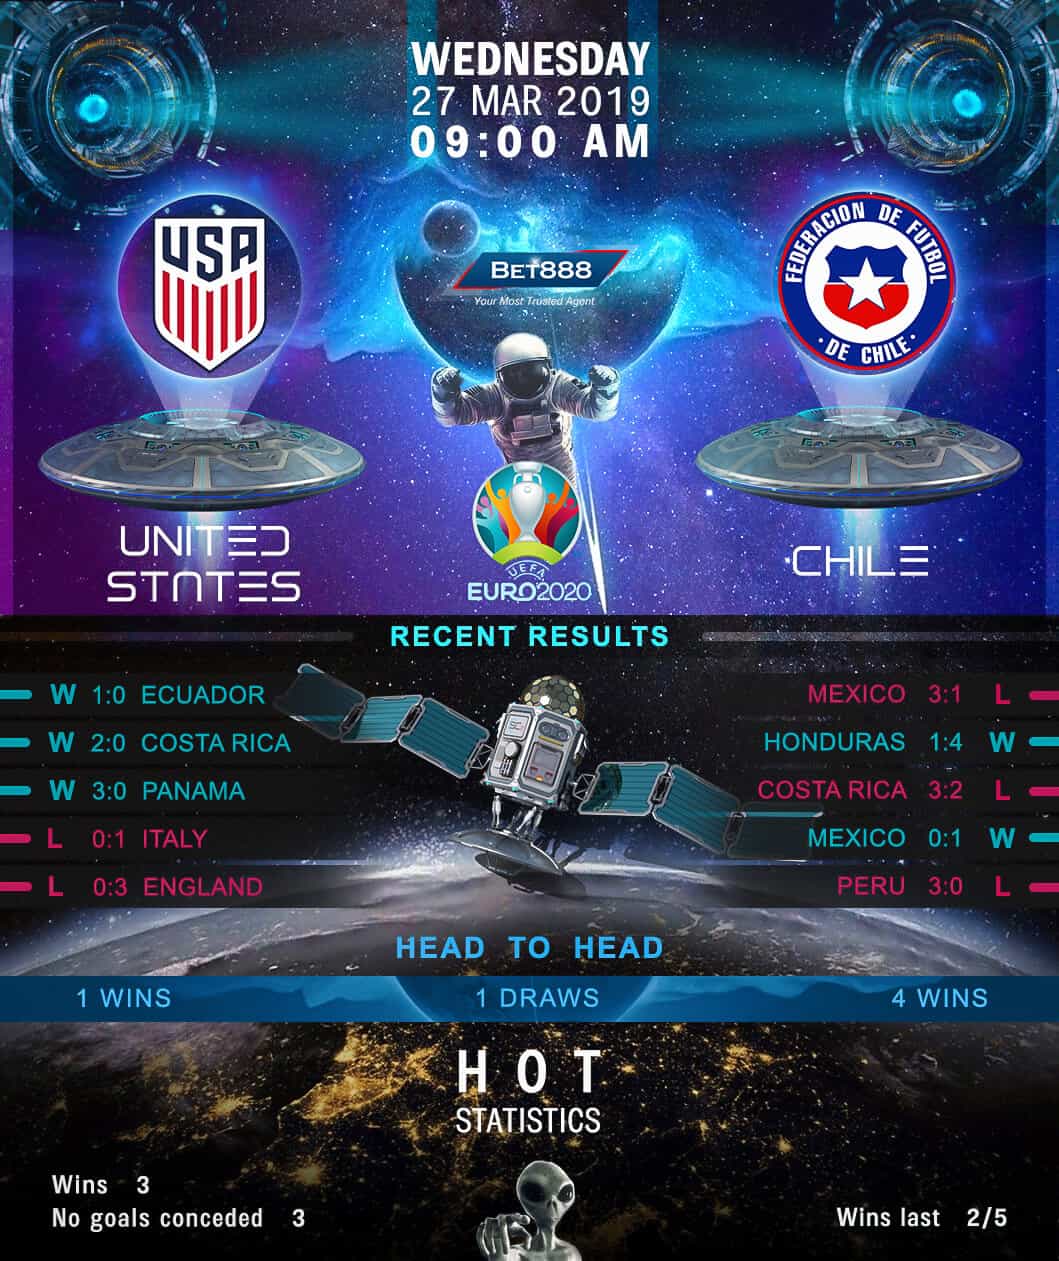 United States vs Chile 27/03/19